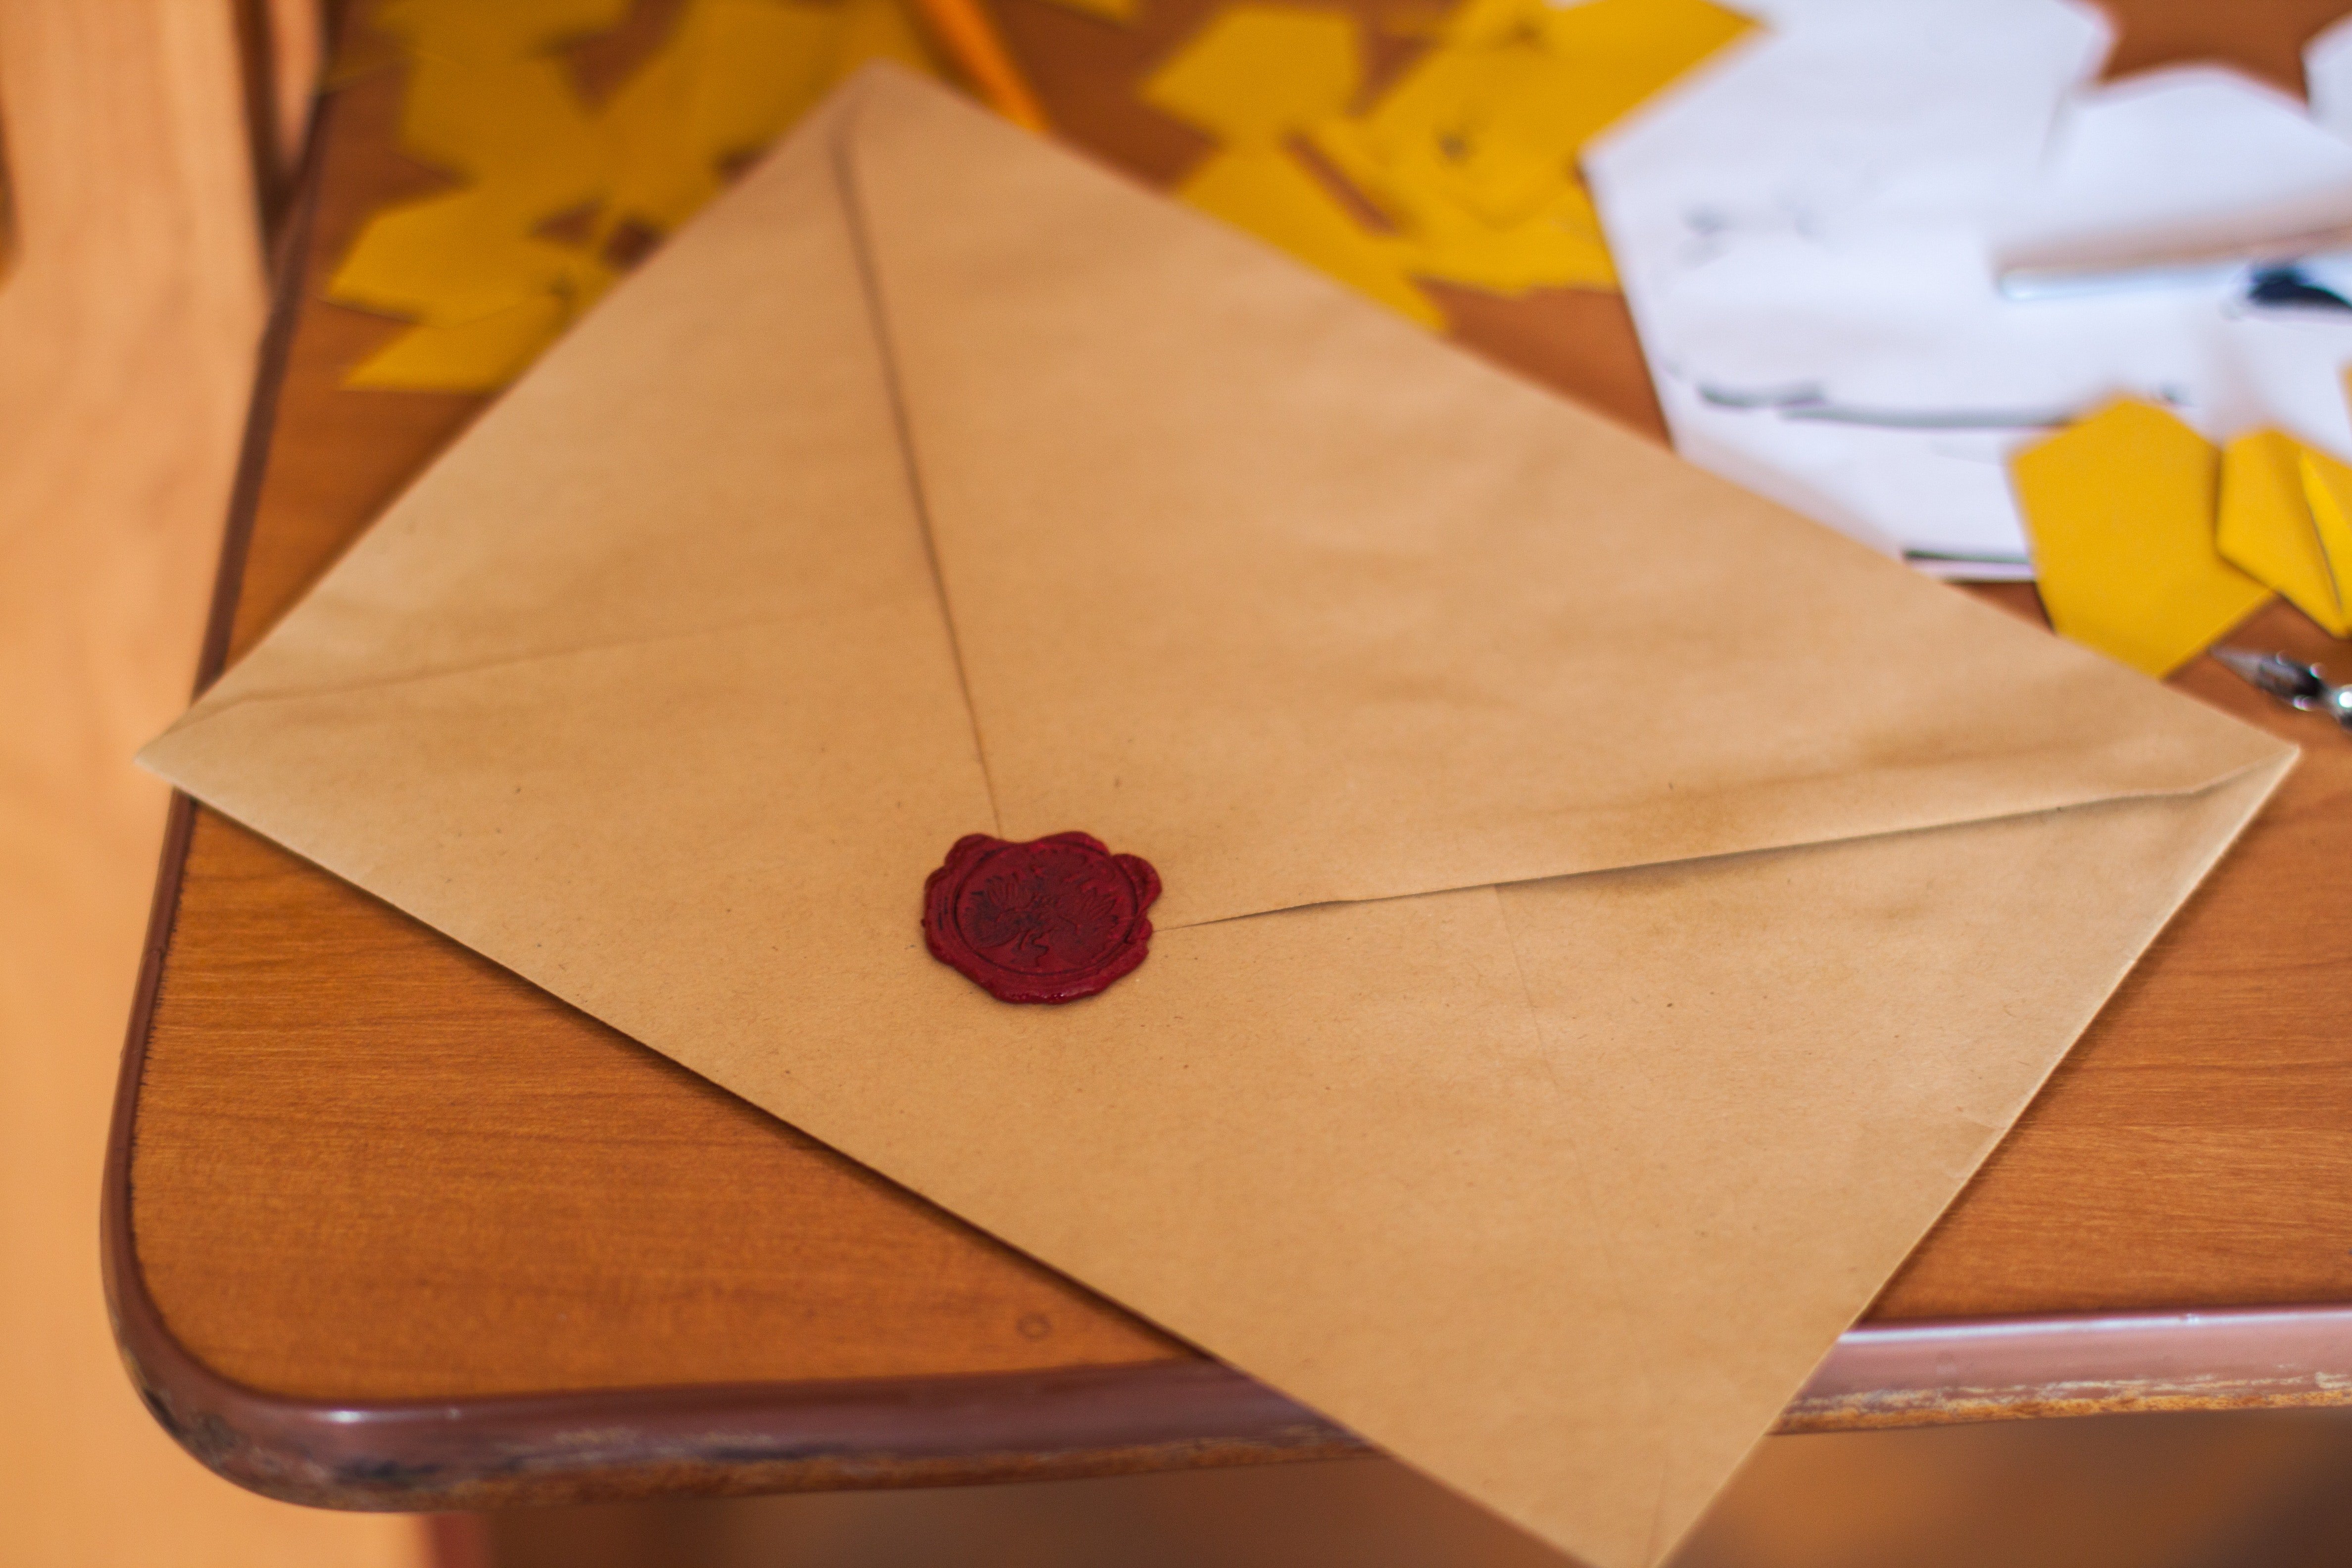 Karen received a letter addressed to her | Source: Pexels